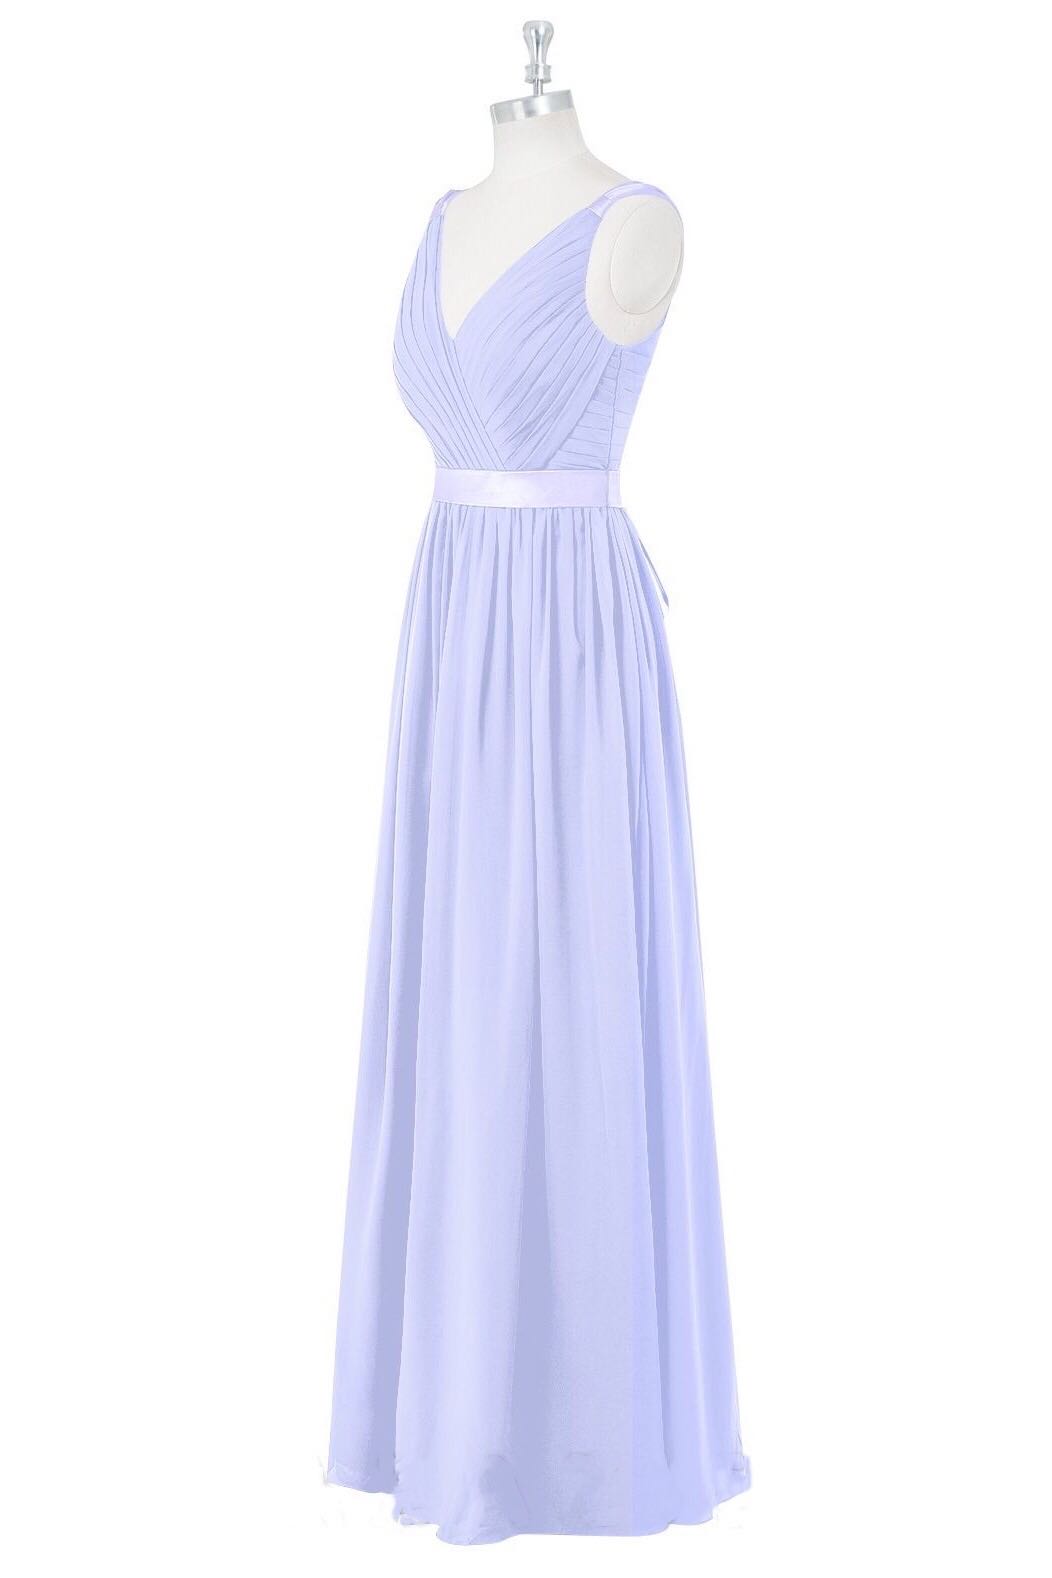 Lavender Deep V Neck Pleated Chiffon Long Bridesmaid Dress with Sash